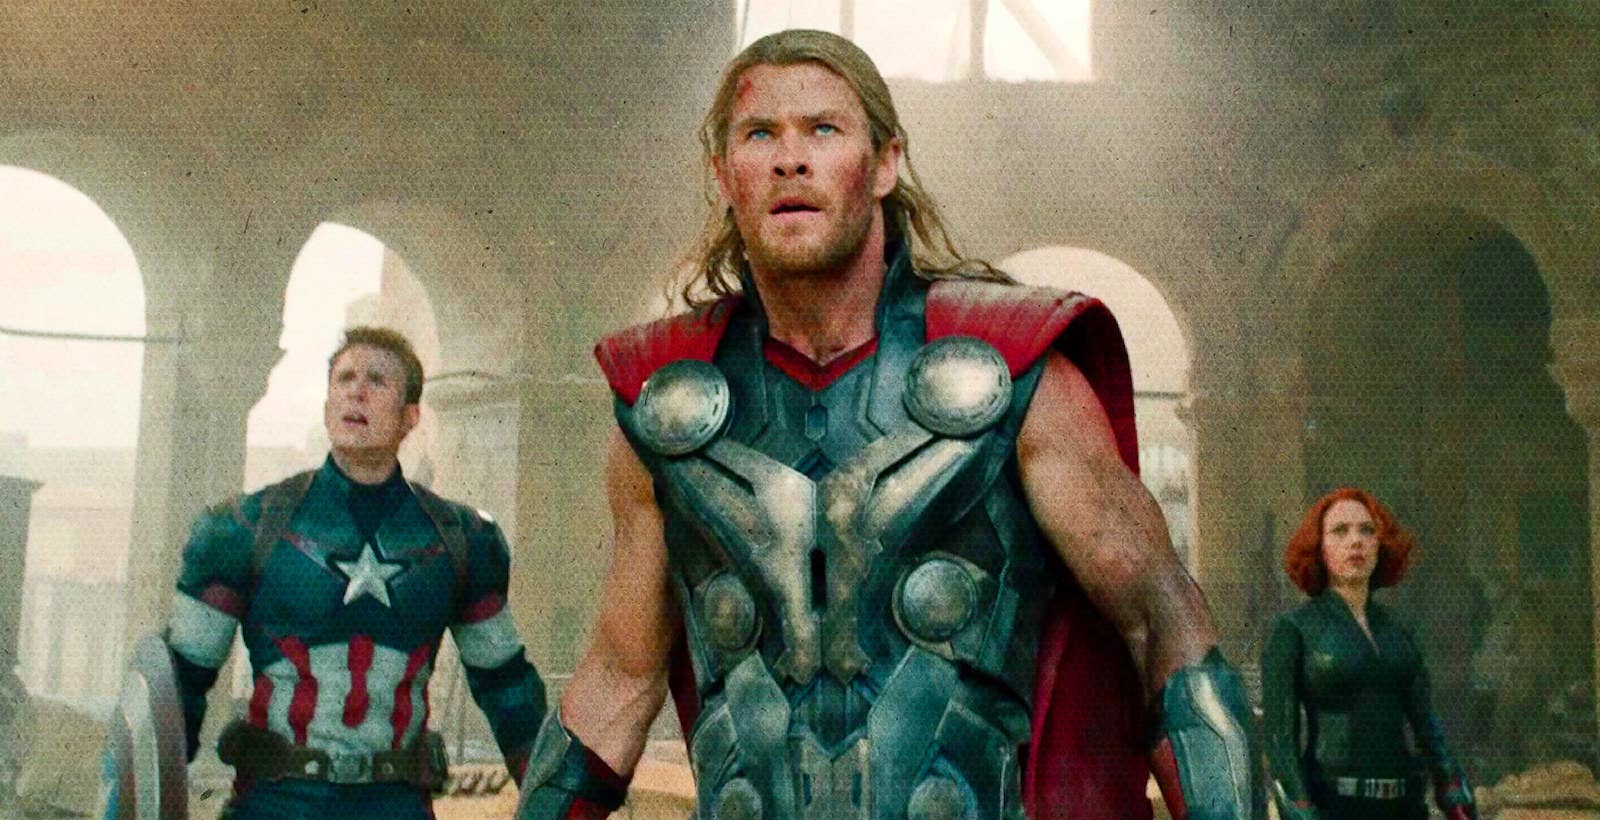 Stupid Sexy Thor, Thor (God of War: Ragnarok)